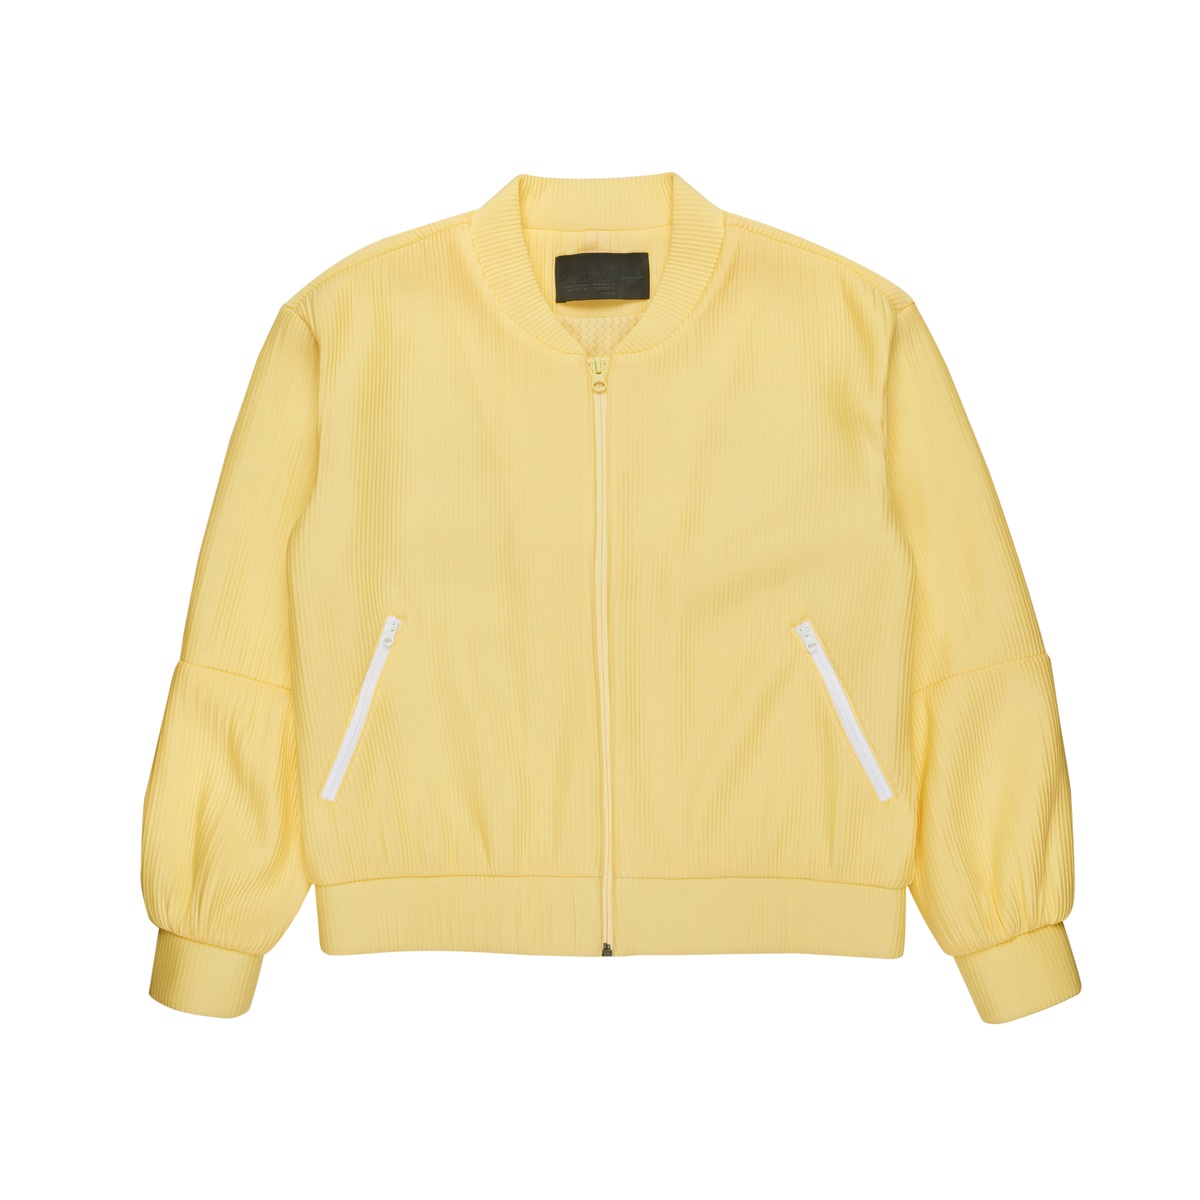 Look And Feel Lemon-Fresh In ARYS' SS18 Activewear